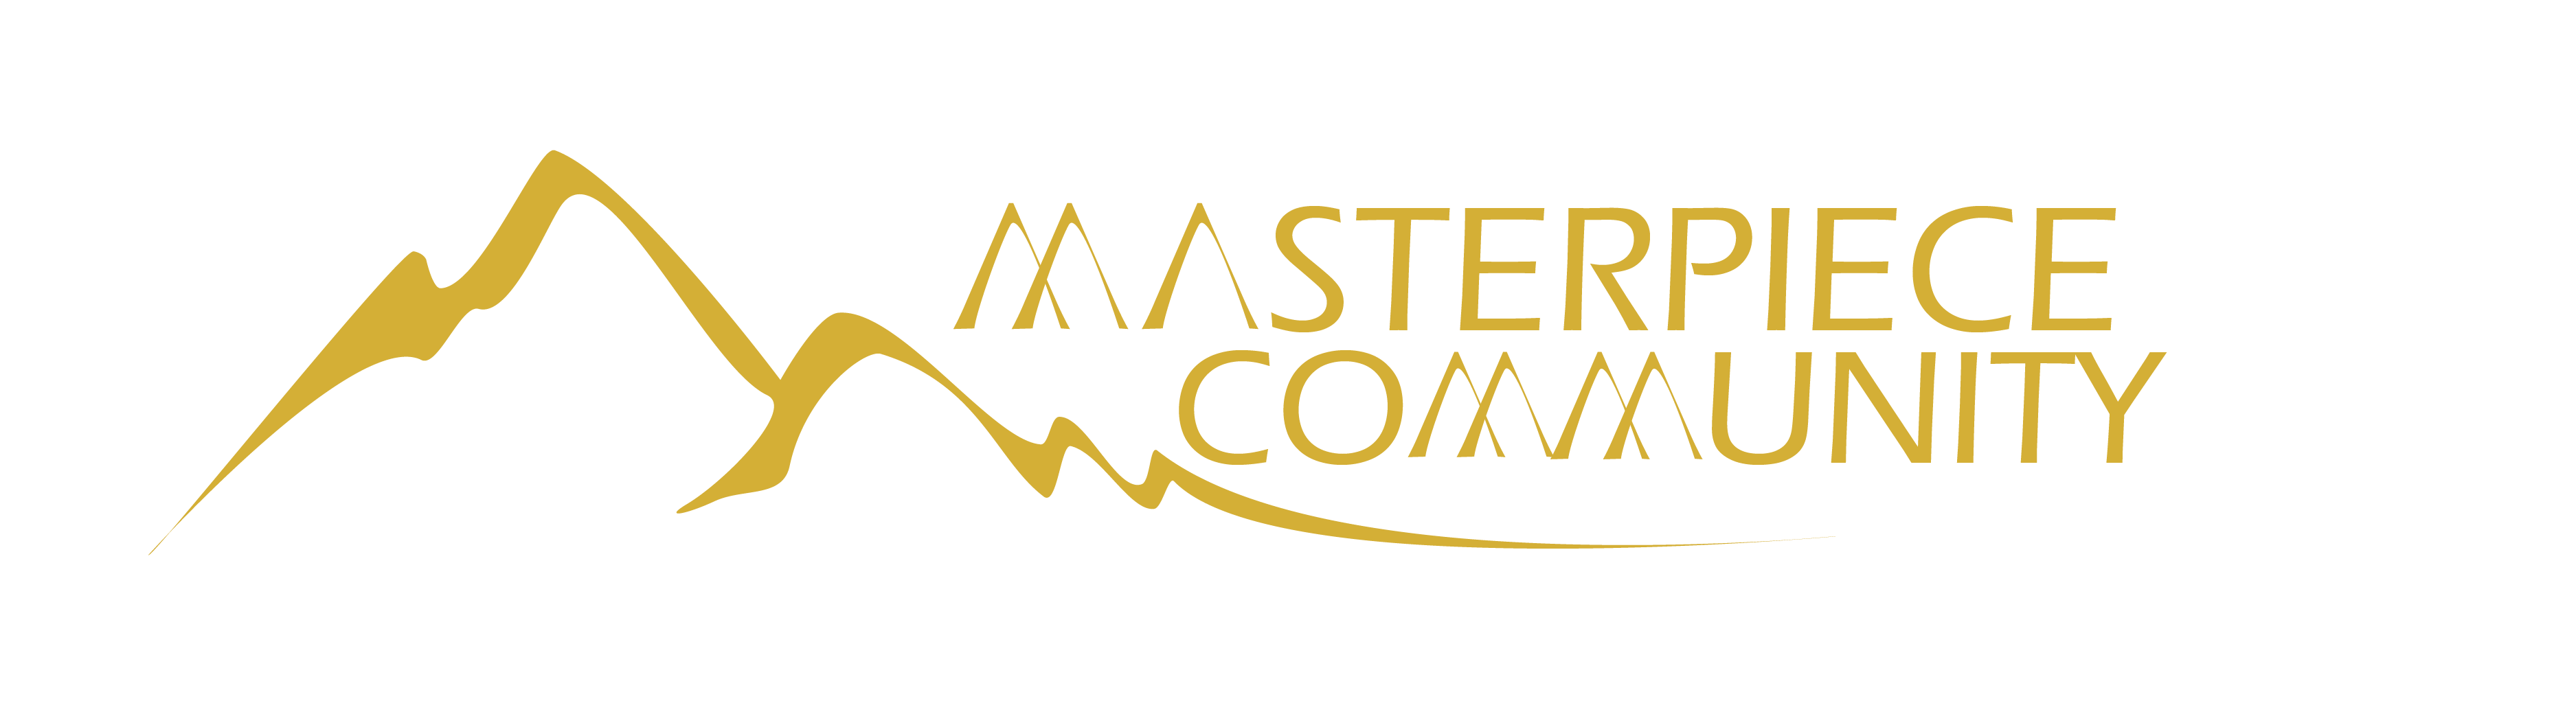 The Masterpiece Community logo